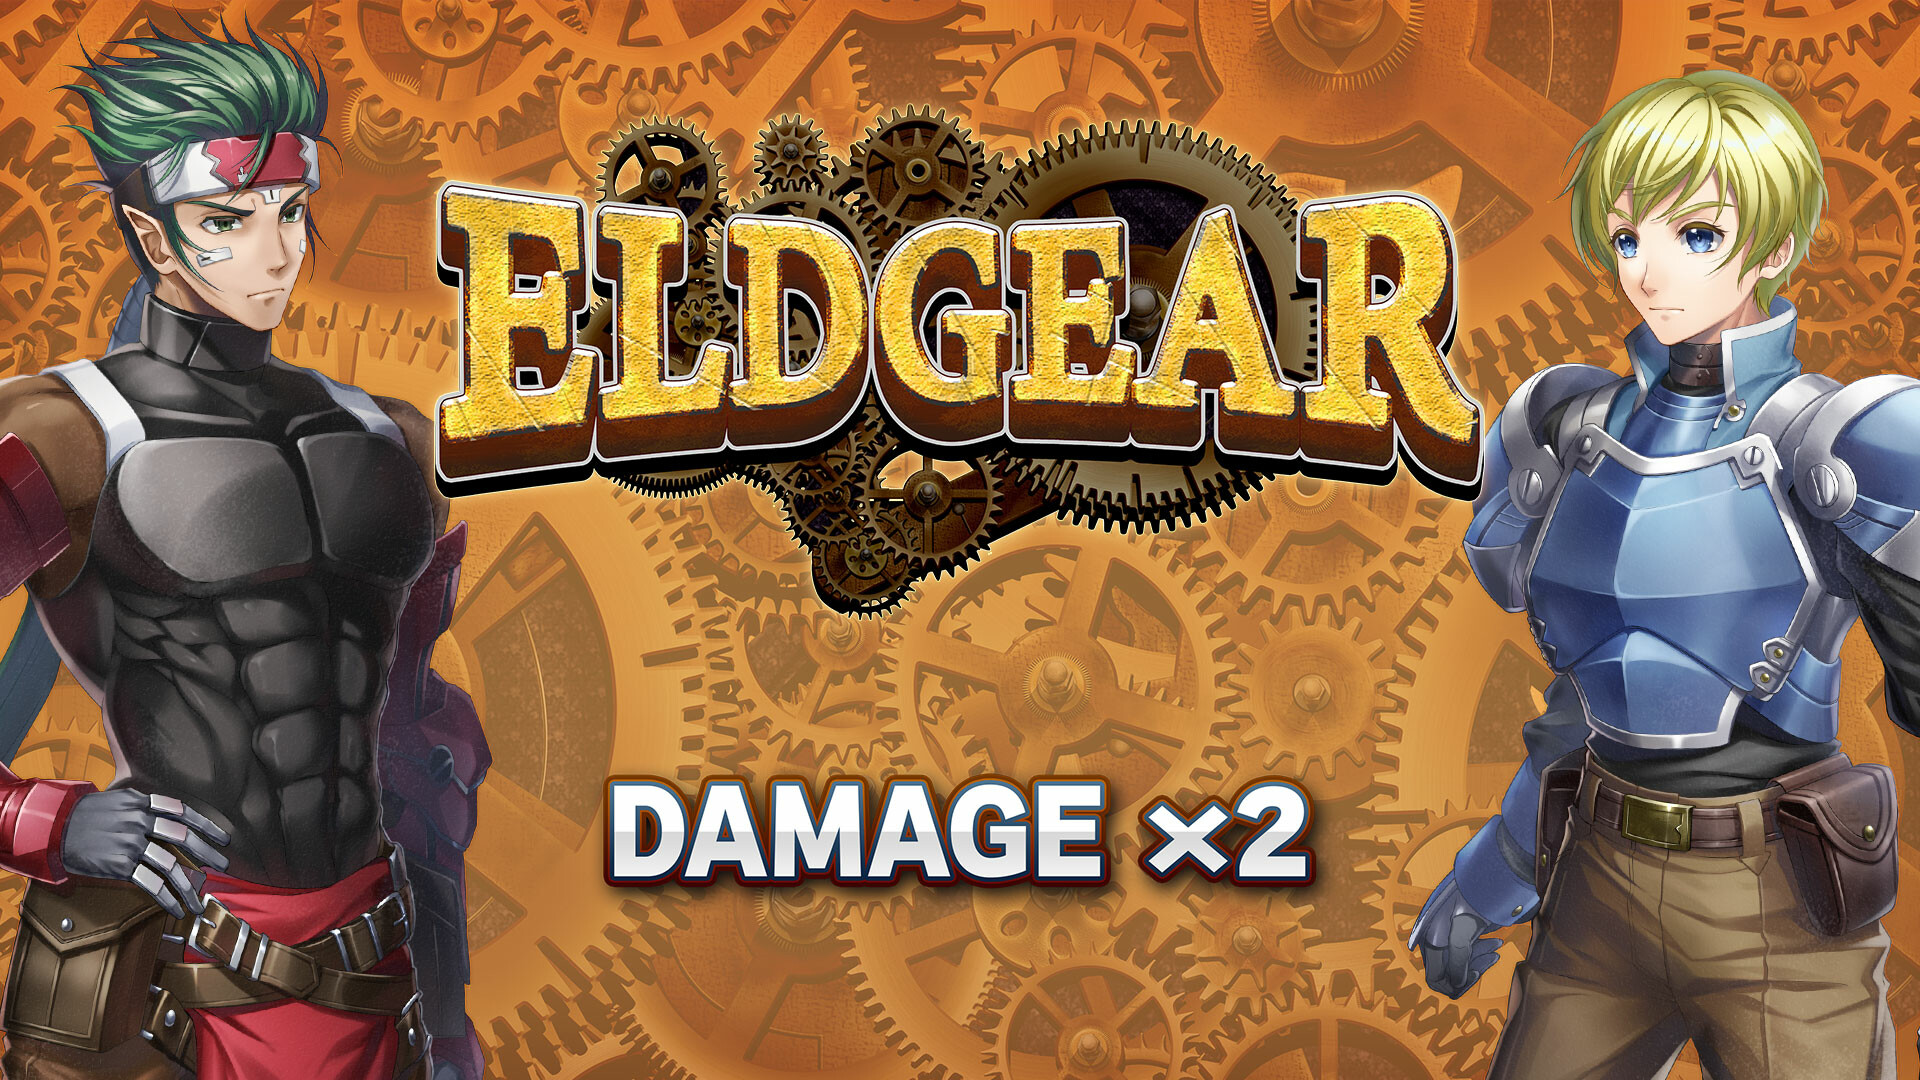 Damage x2 - Eldgear Featured Screenshot #1